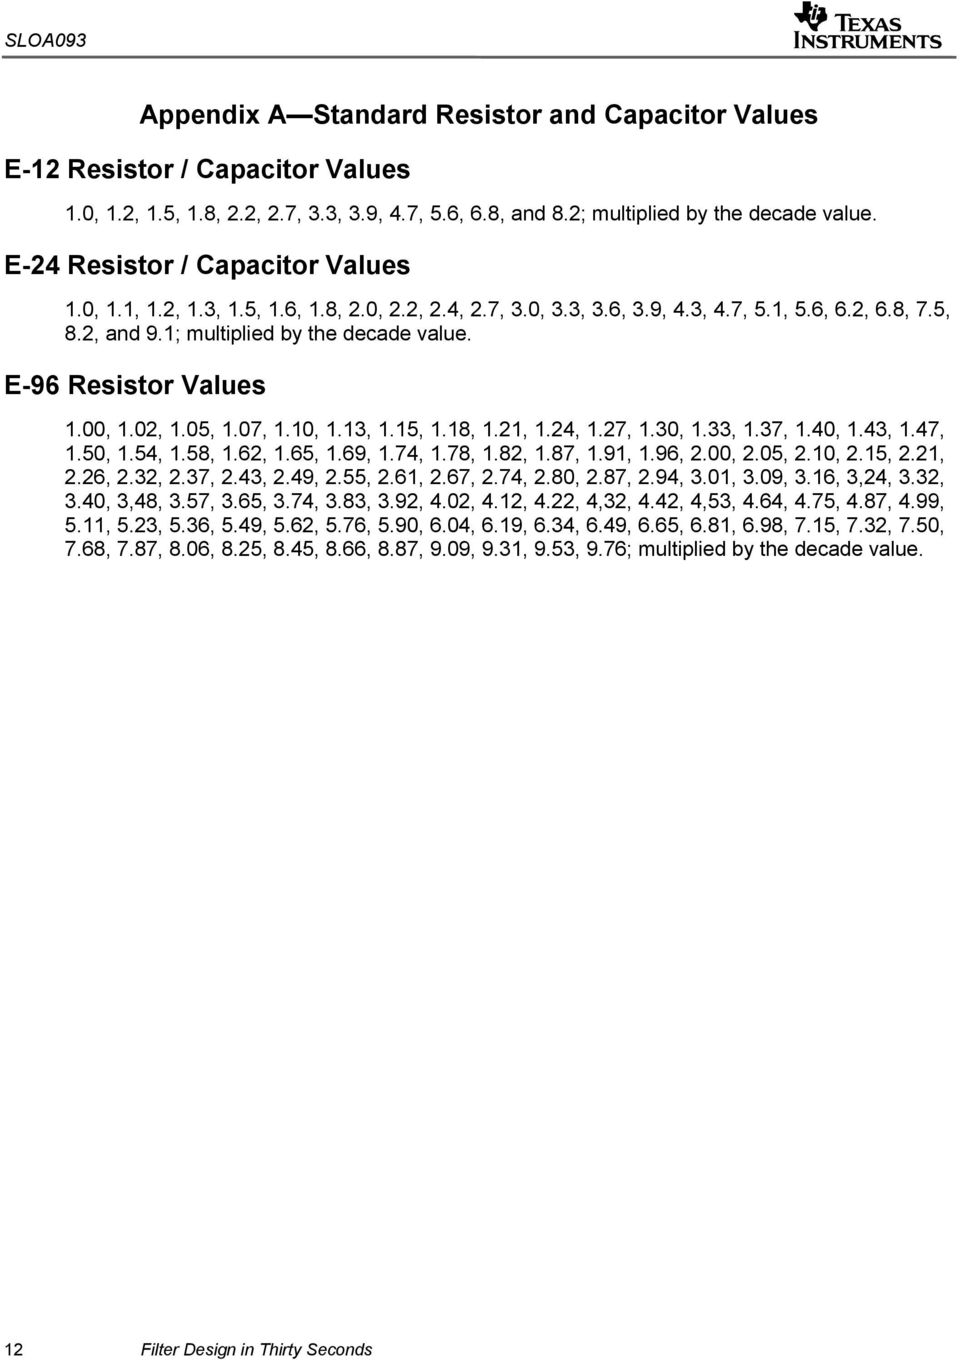 E96 Resistor Values 1.00, 1.02, 1.05, 1.07, 1.10, 1.13, 1.15, 1.18, 1.21, 1.24, 1.27, 1.30, 1.33, 1.37, 1.40, 1.43, 1.47, 1.50, 1.54, 1.58, 1.62, 1.65, 1.69, 1.74, 1.78, 1.82, 1.87, 1.91, 1.96, 2.